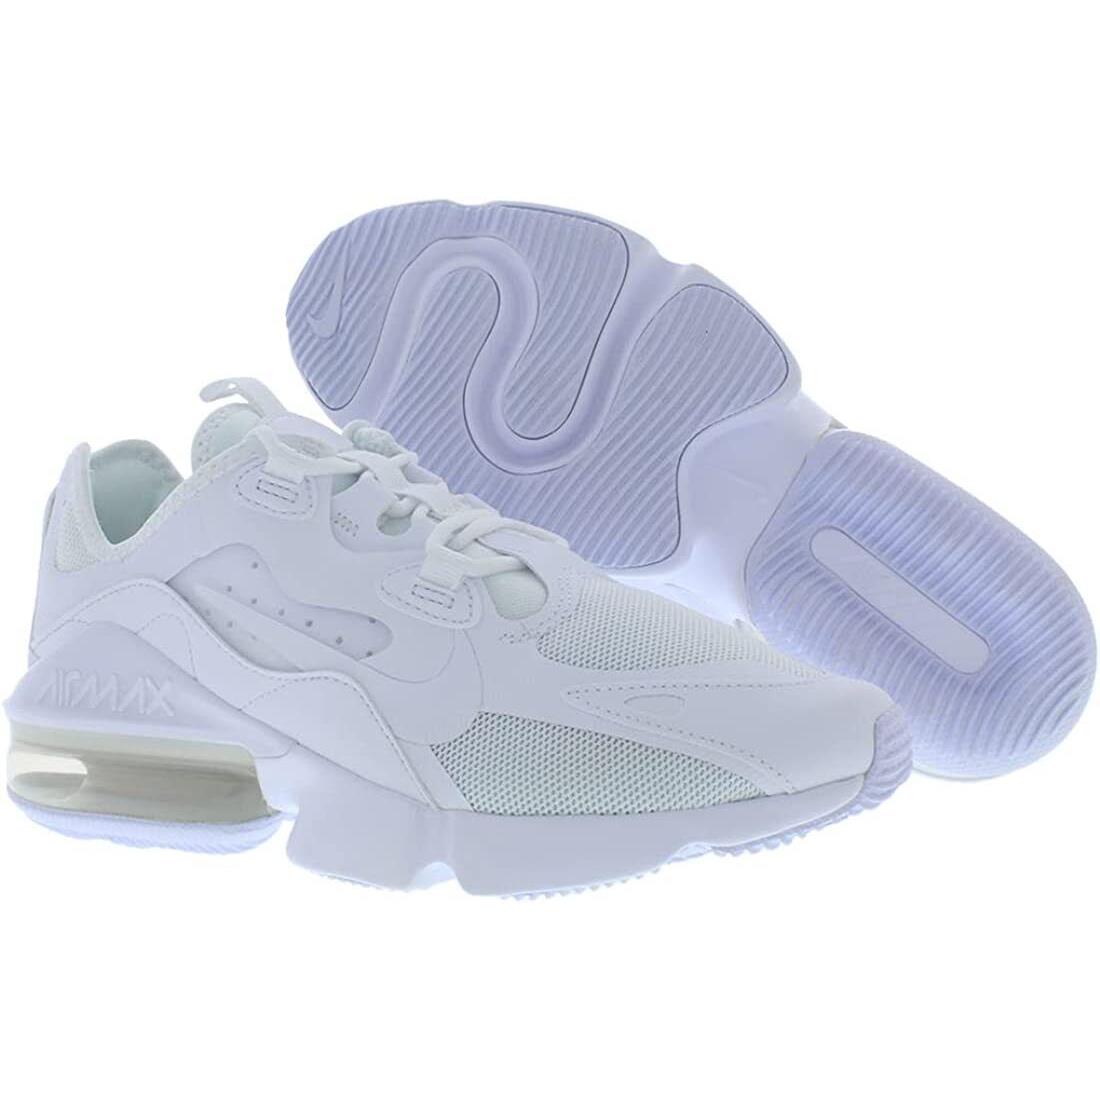 Nike Air Max Infinity 2 White/white-photon Dust Women s Size 8.5 or 9 CU9453 100